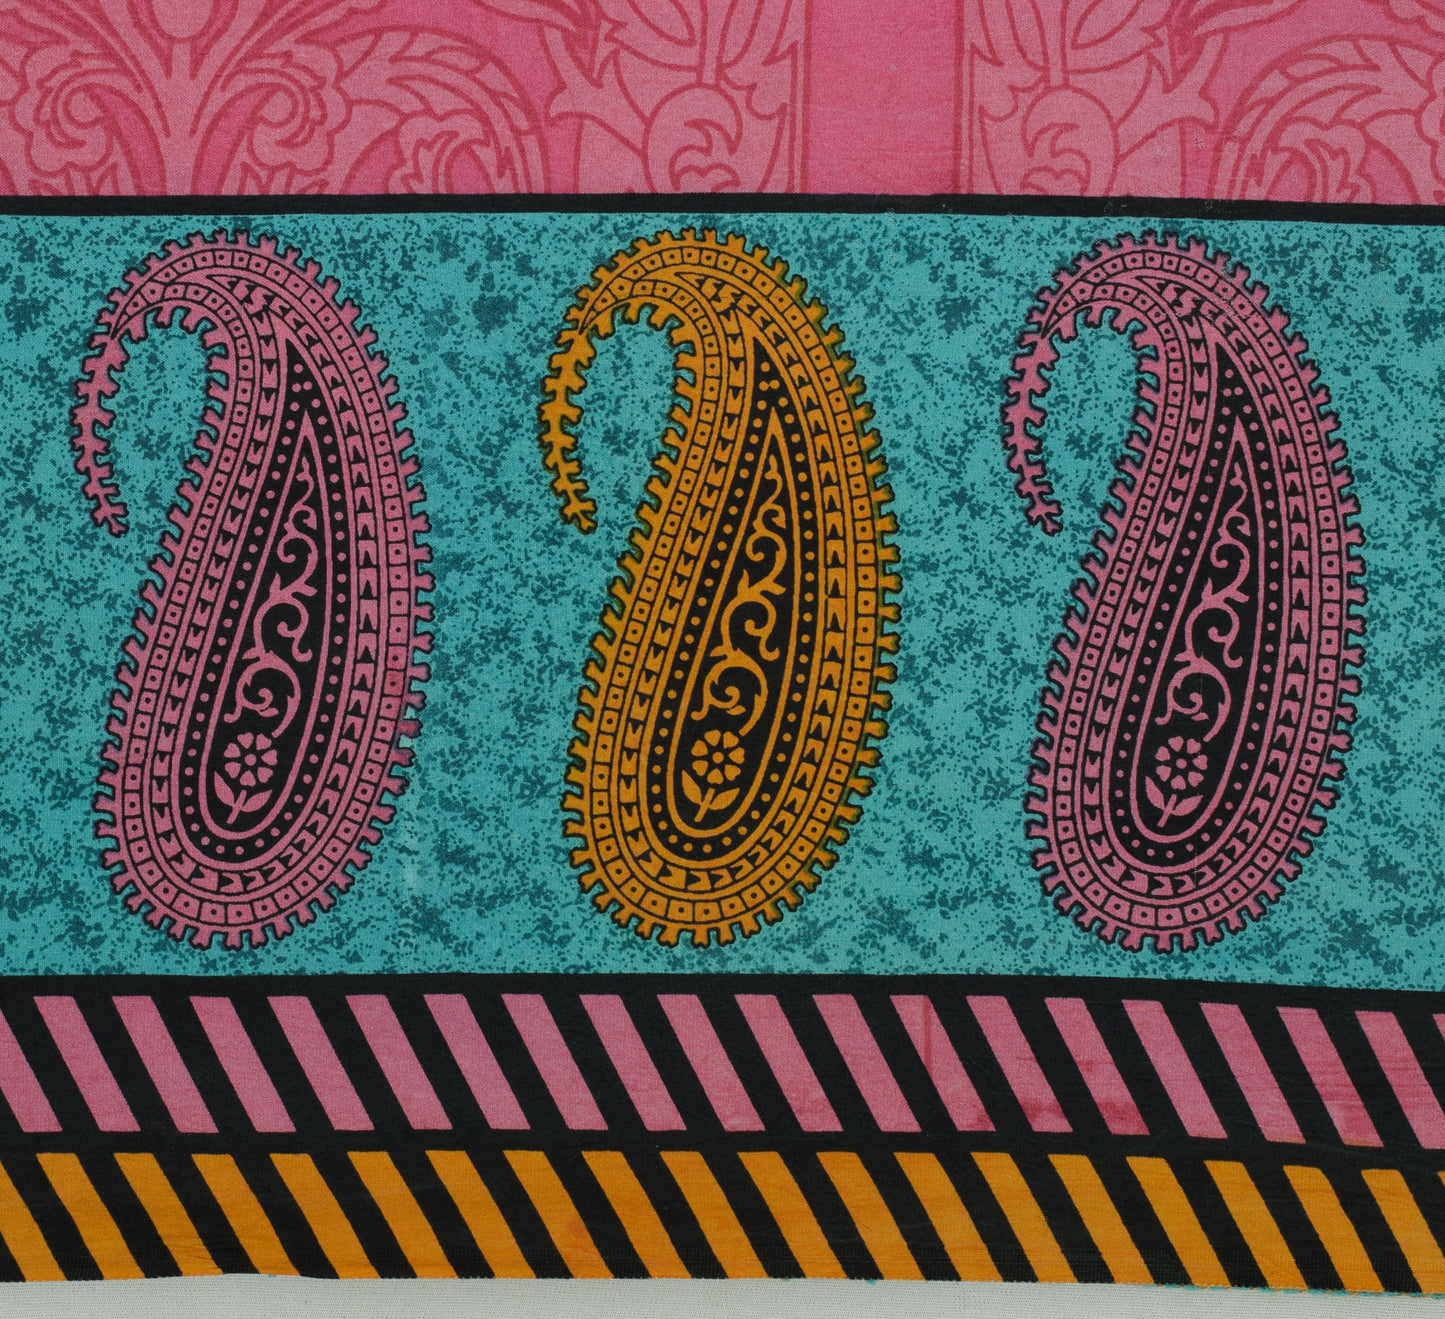 Sushila Vintage Pink Sari 100% Pure Silk Printed Floral Soft Craft 5 Yard Fabric